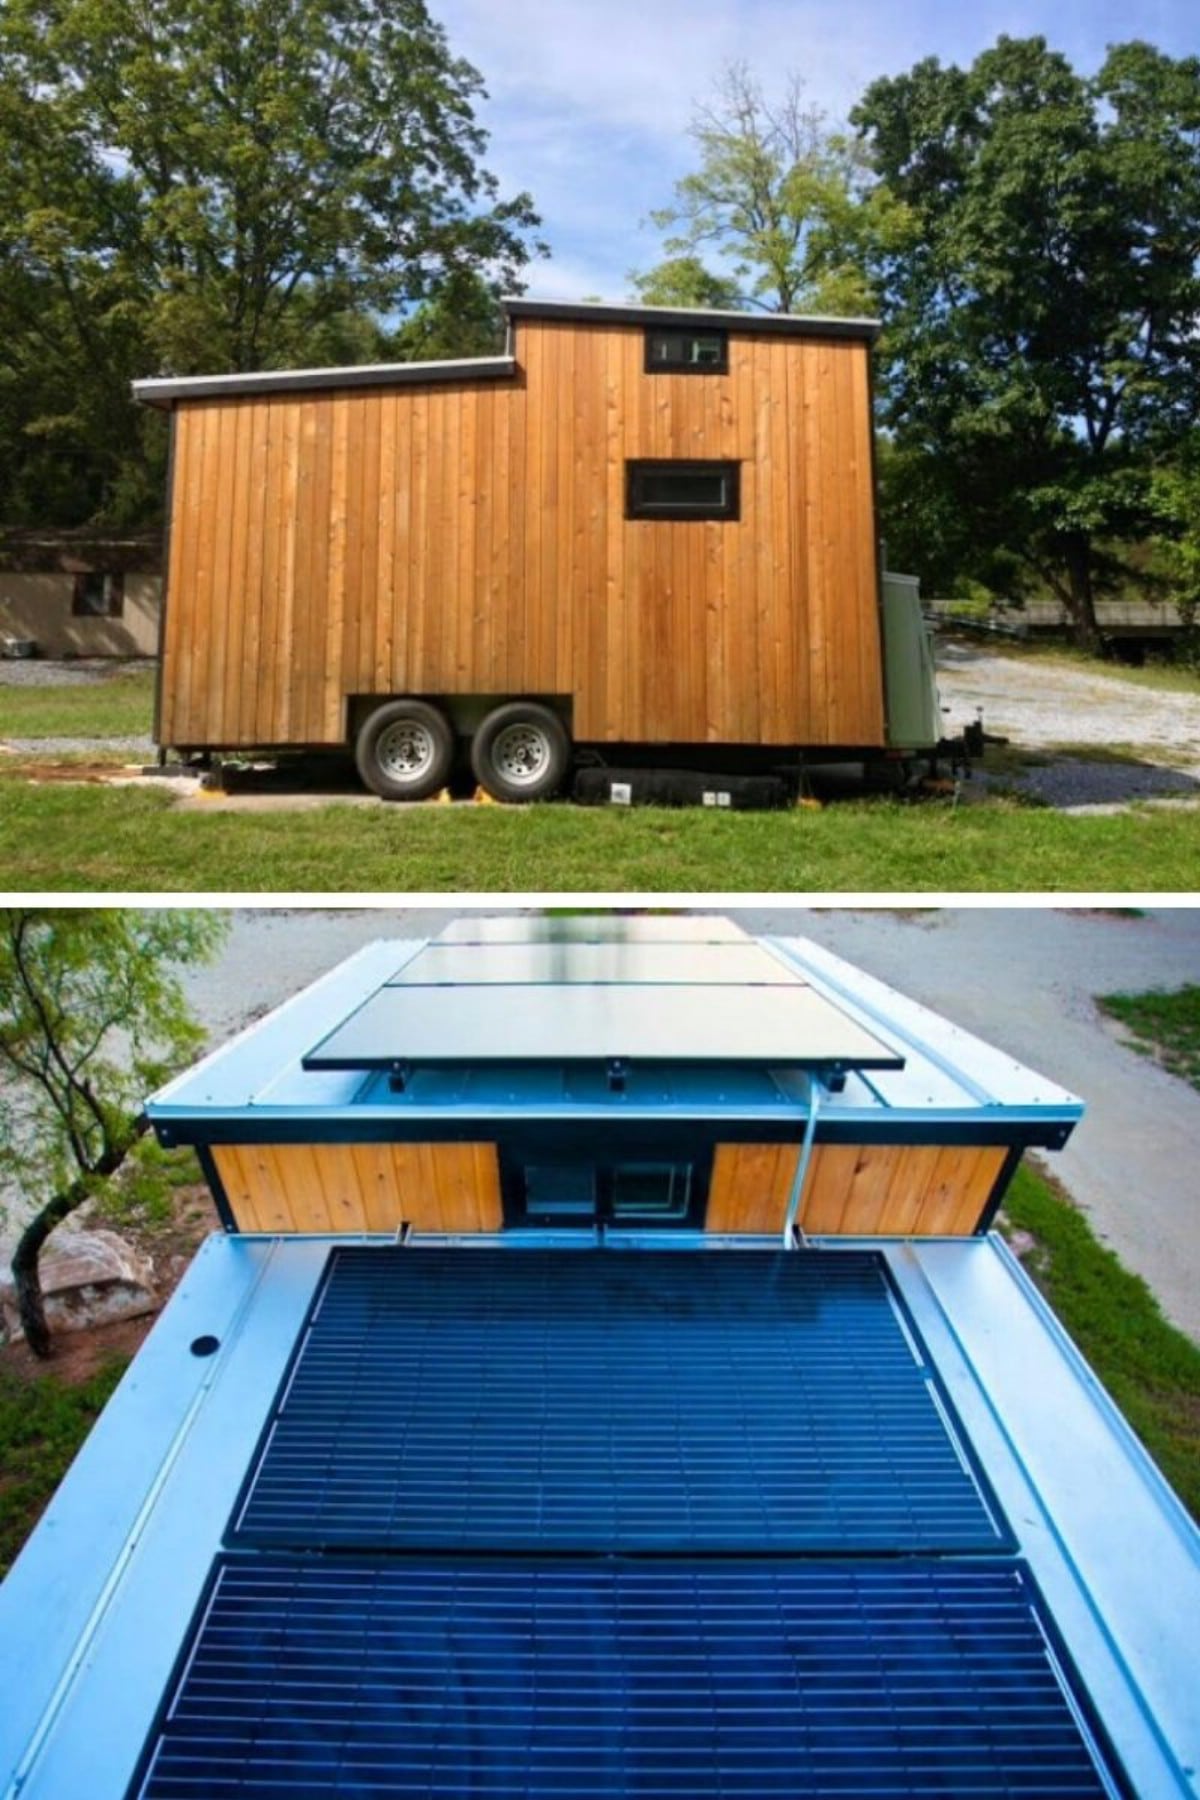 The Tiny Solar House